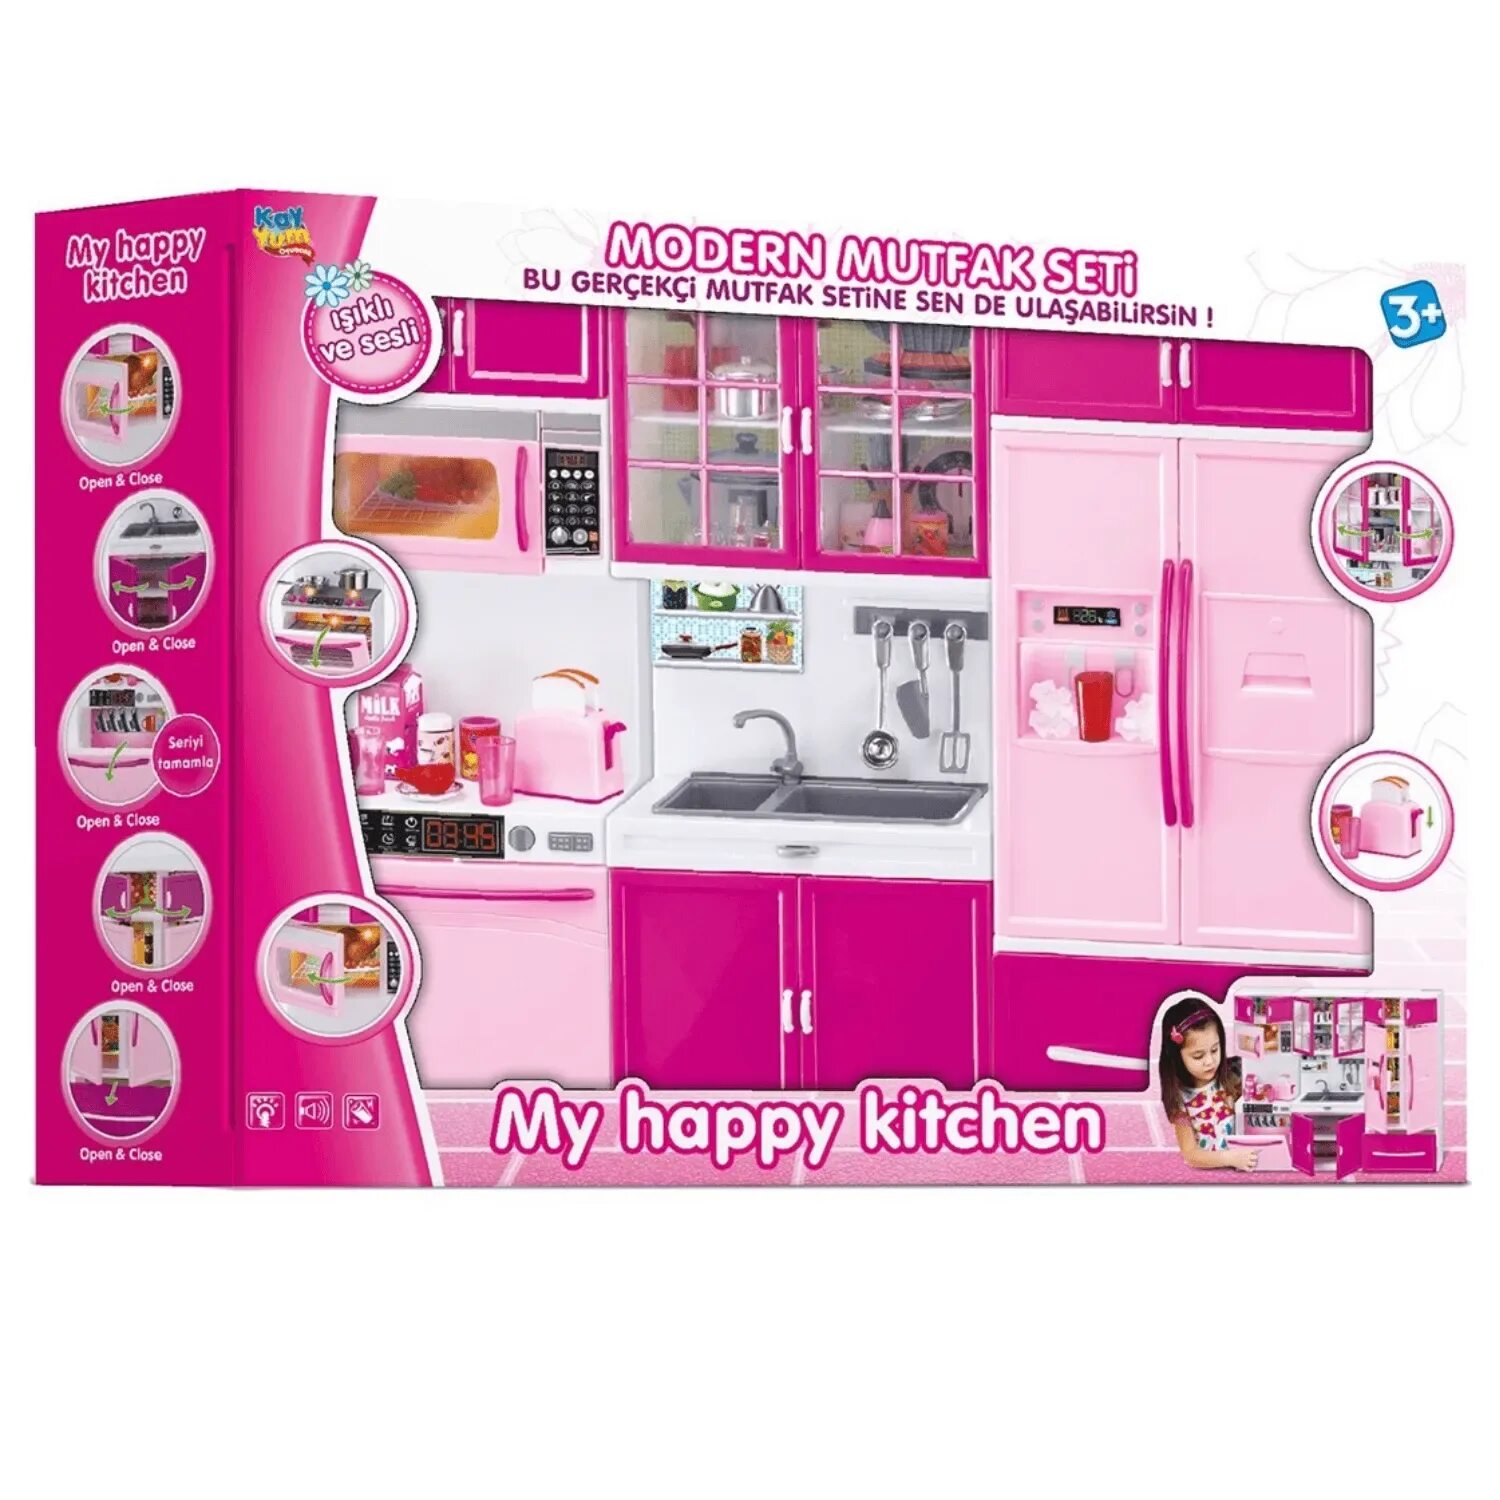 Переведи kitchen. Хэппи Китчен. My Happy Kitchen. My Happy Kitchen перевод на русский. My Happy Kitchen Set.